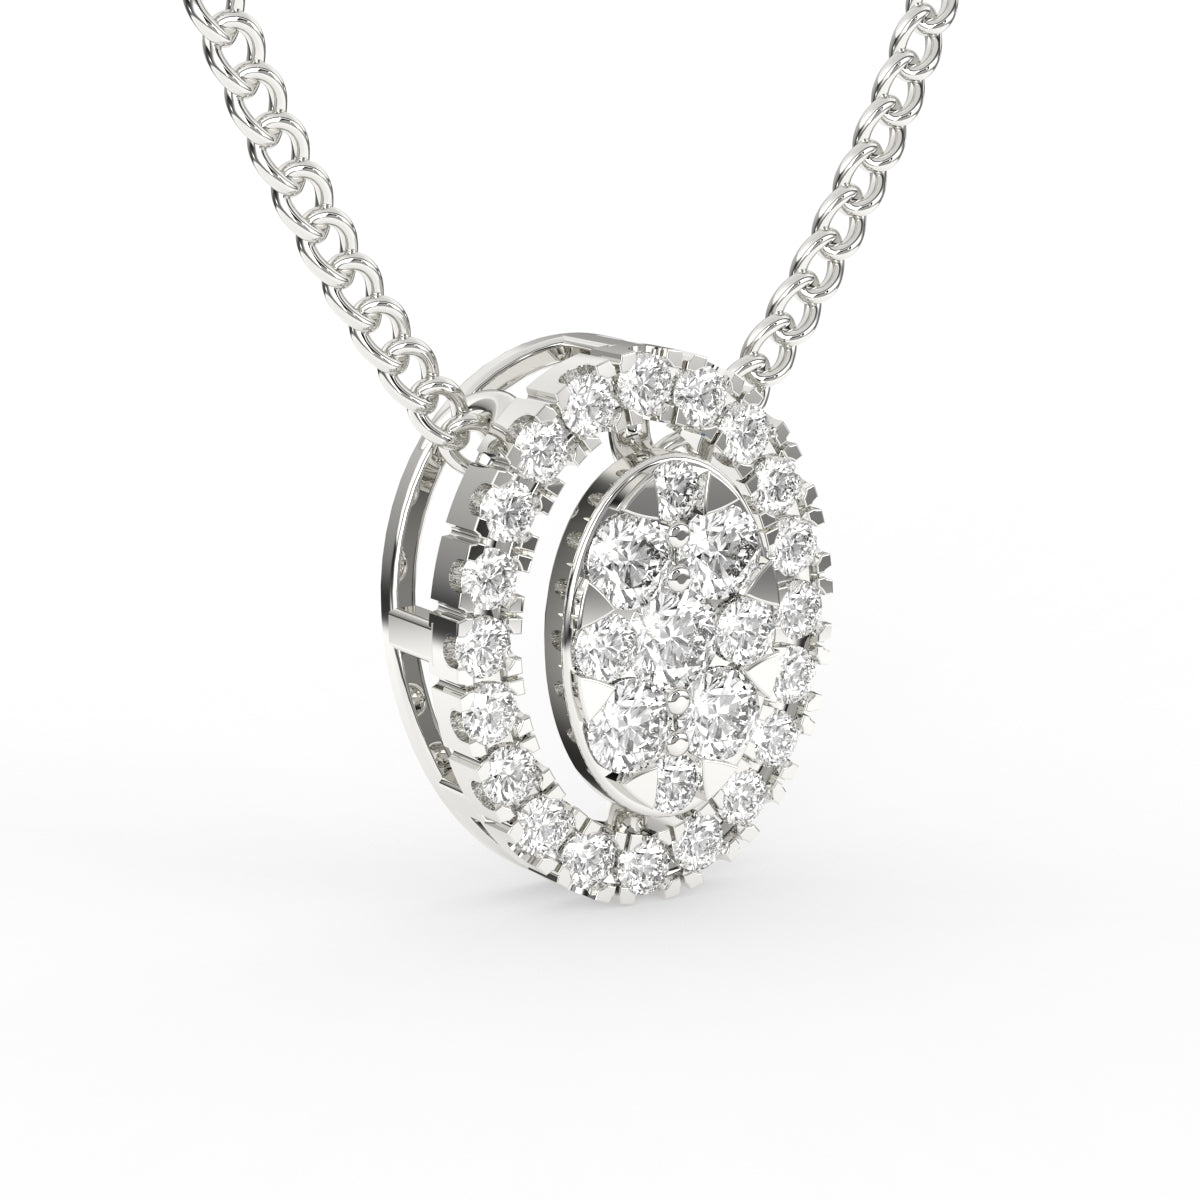 Oval halo diamond pendant chain